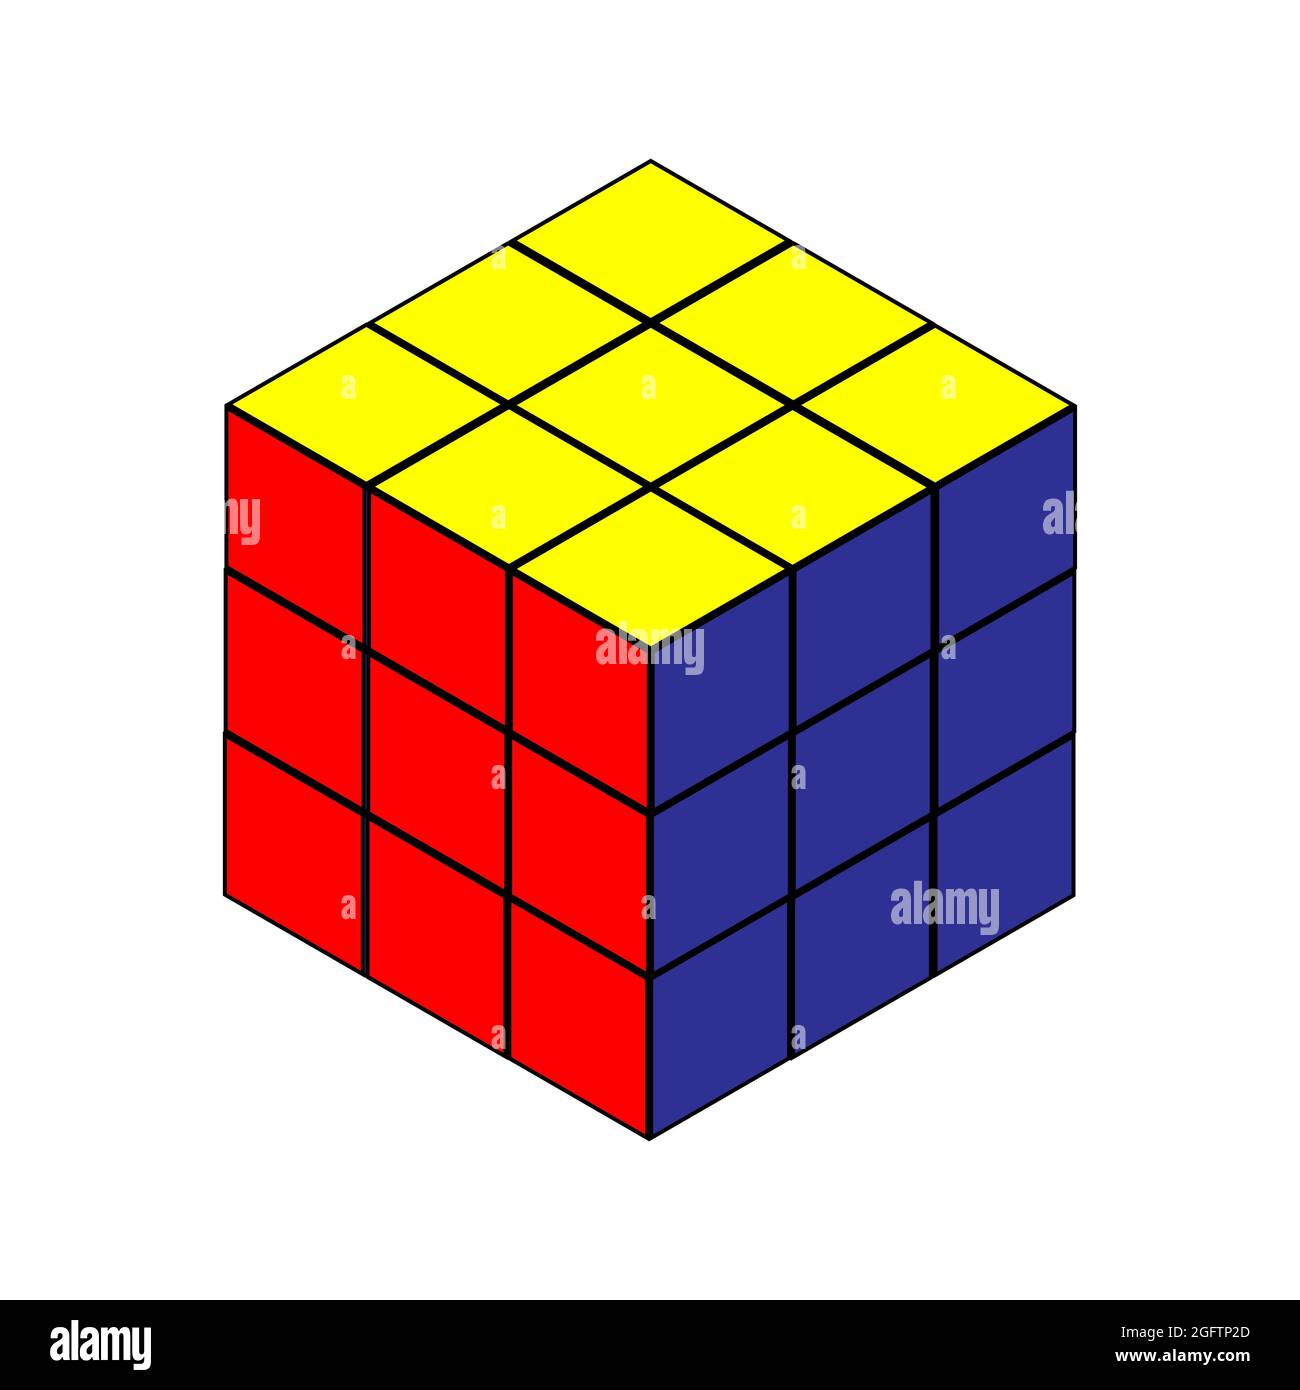 9,498 Rubiks Cube Images, Stock Photos, 3D objects, & Vectors